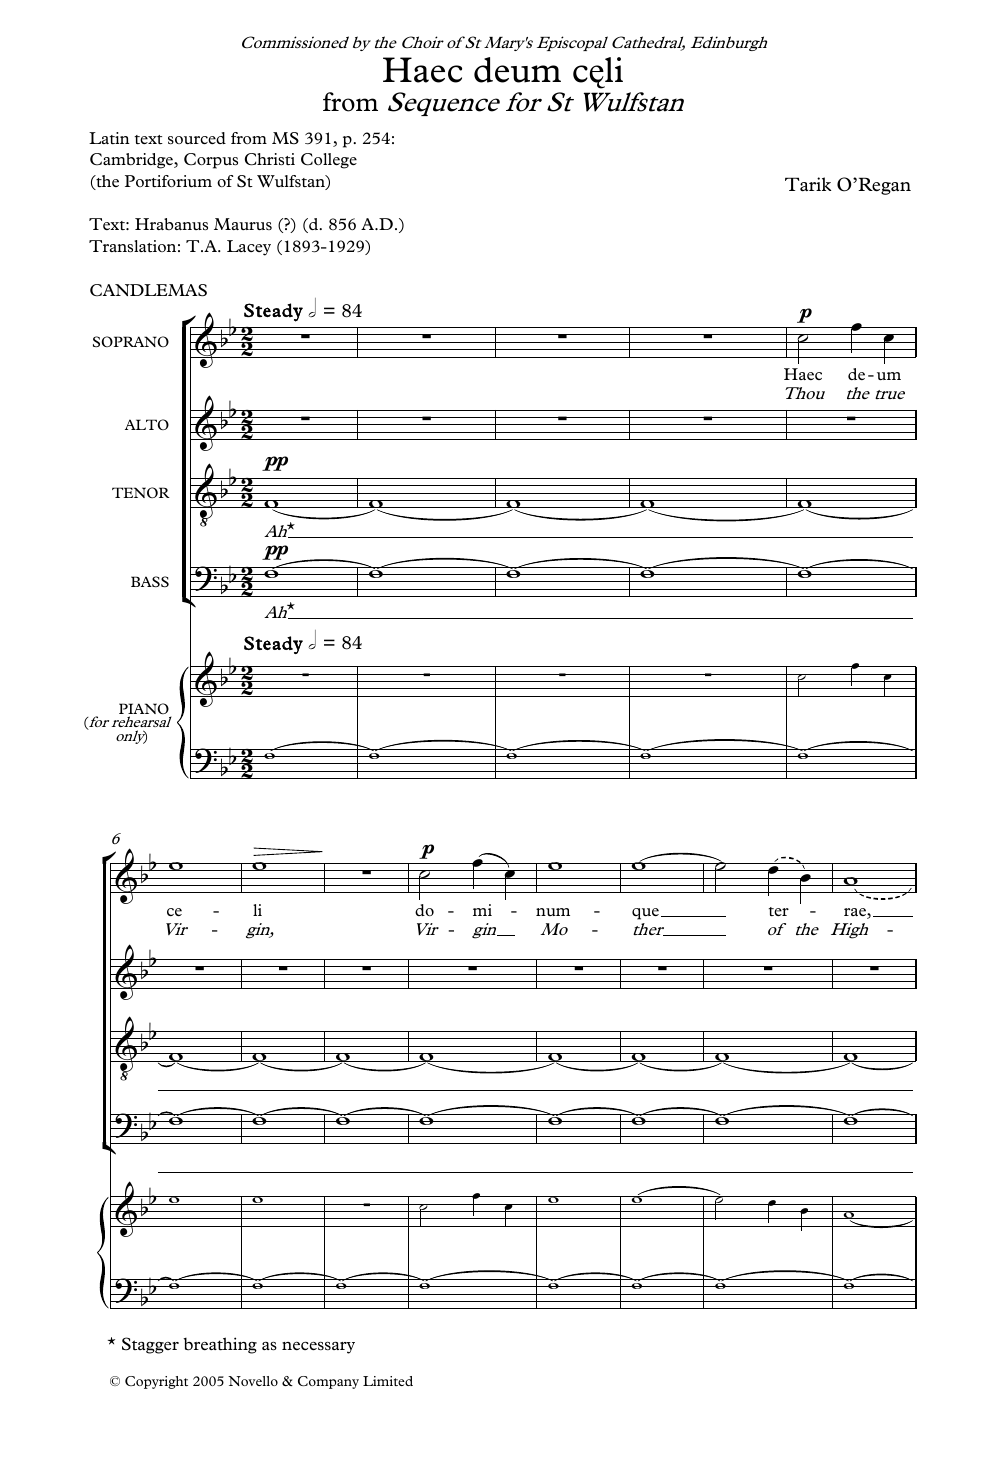 Tarik O'Regan Haec Deum Celi (From Sequence for St Wulfstan) Sheet Music Notes & Chords for SATB Choir - Download or Print PDF